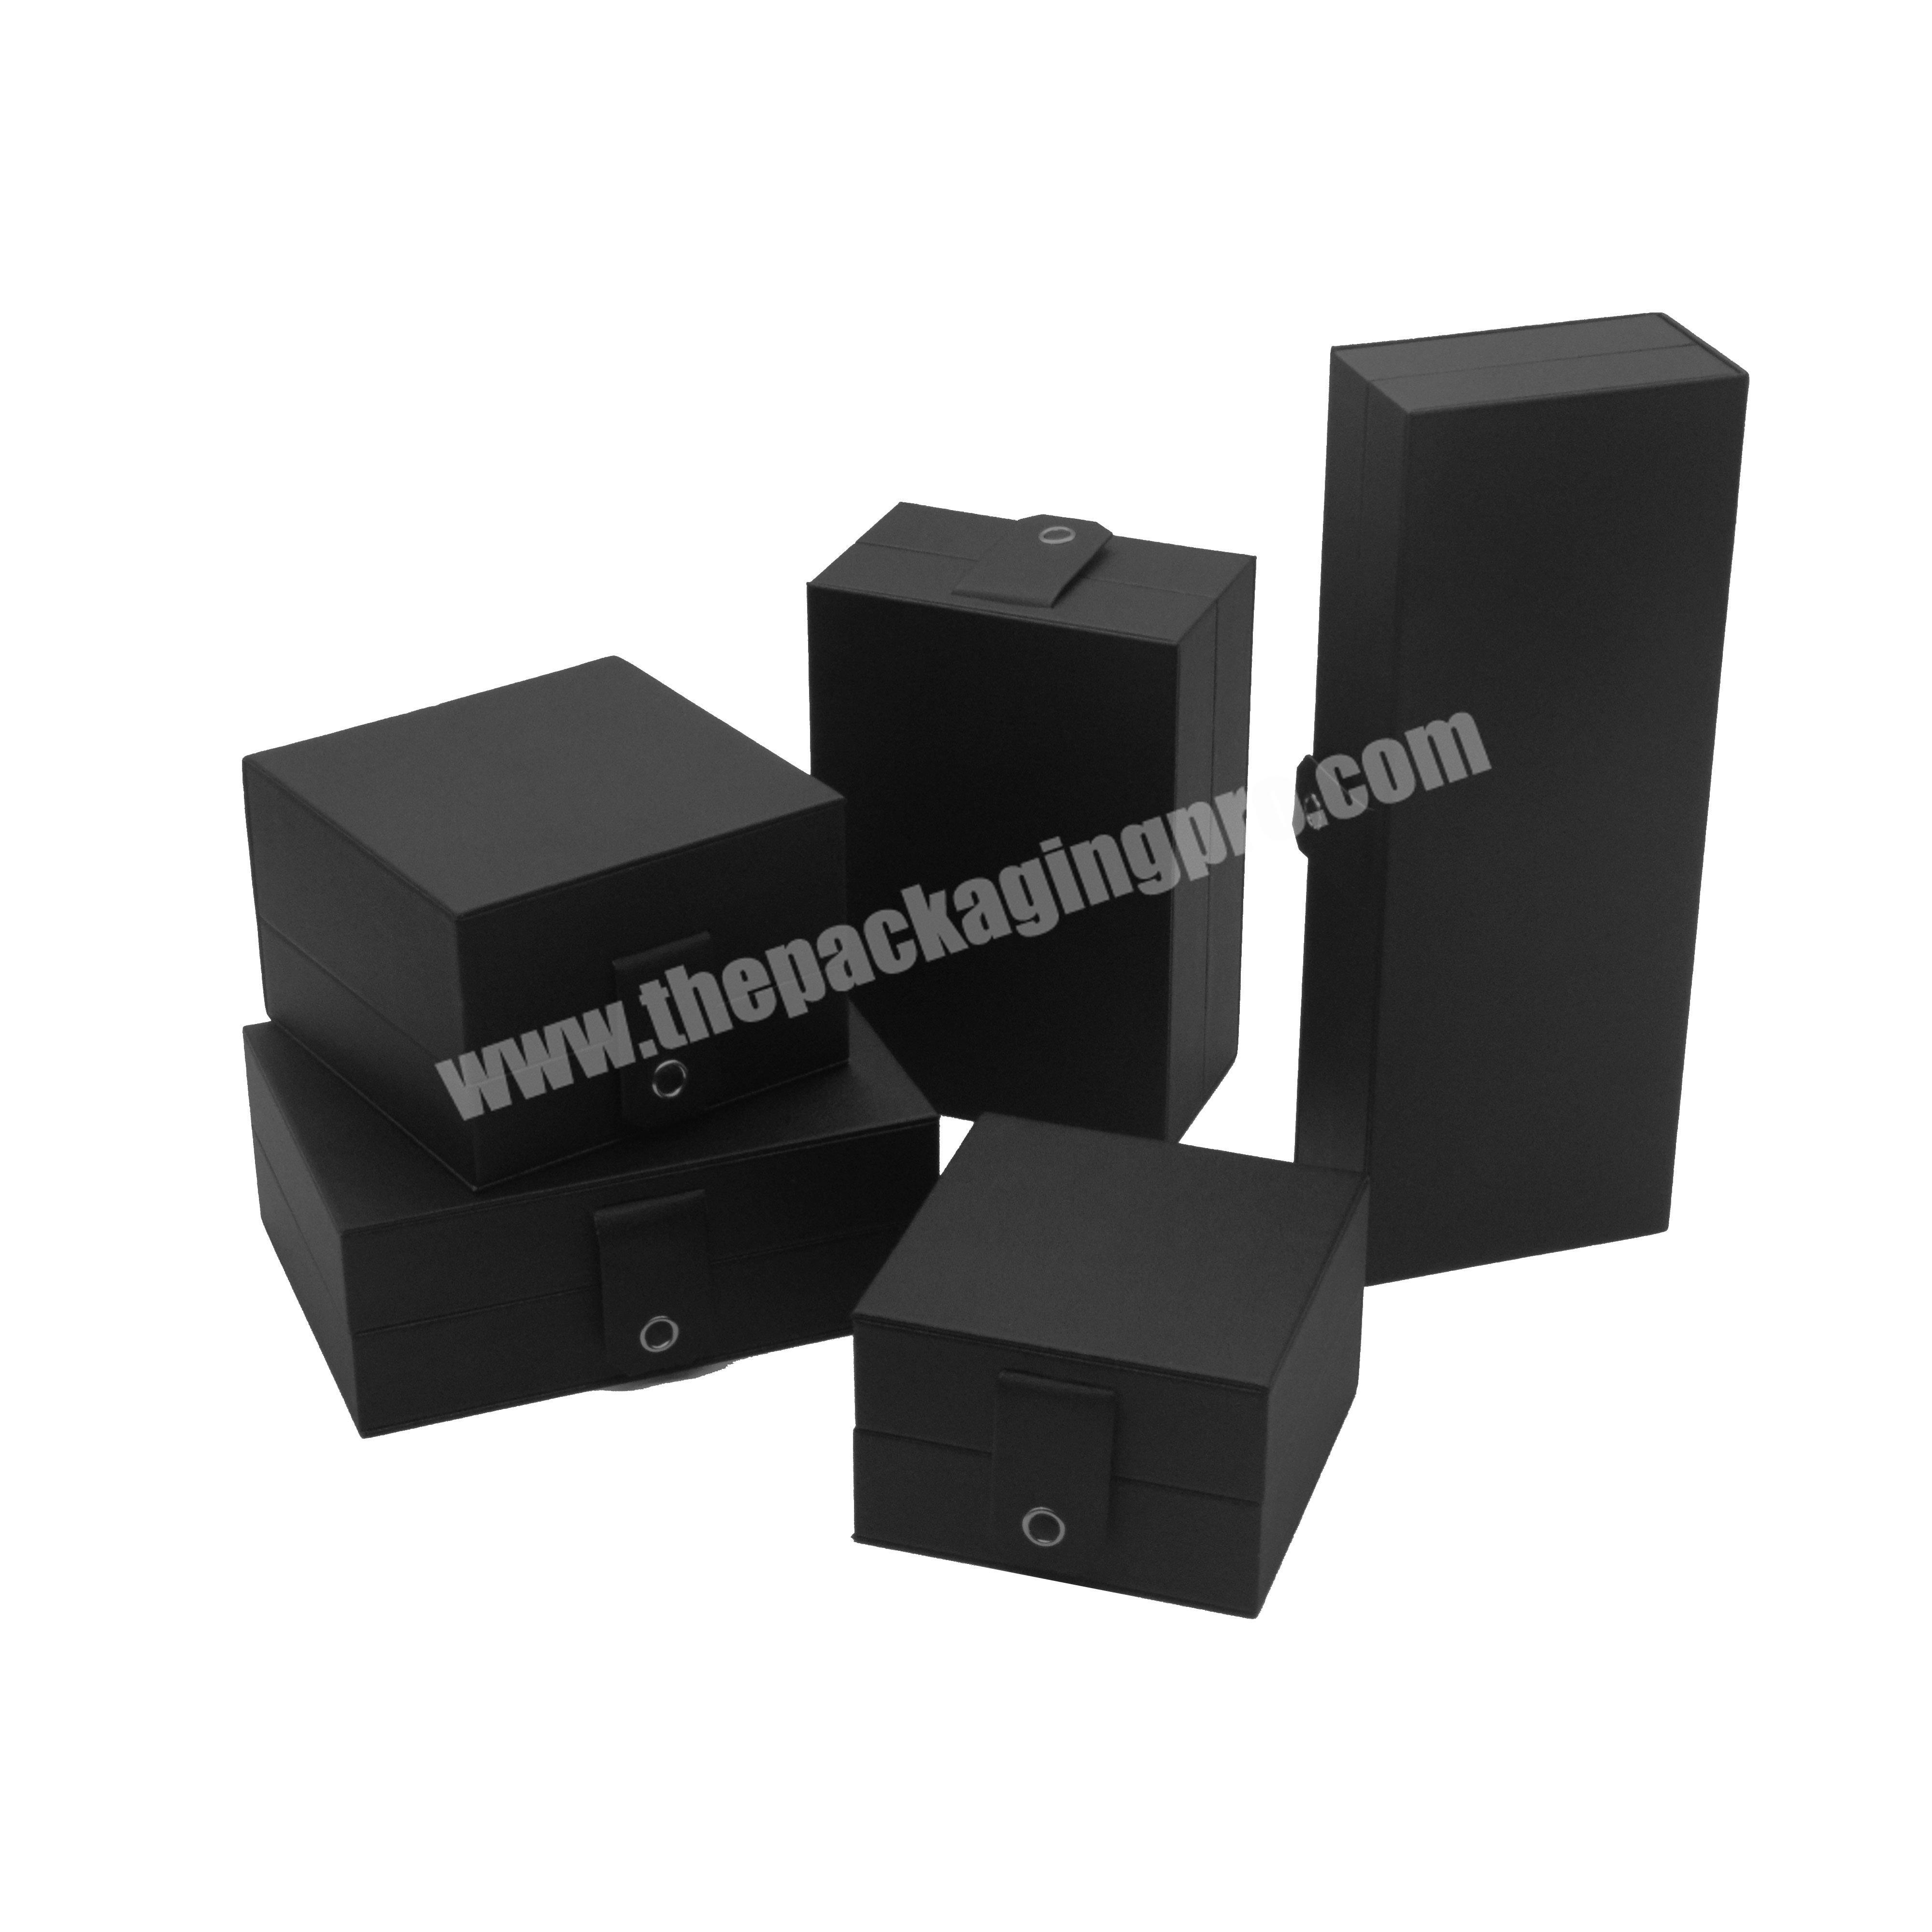 whole luxury button black jewelry gift box set pu leather jewelry packaging